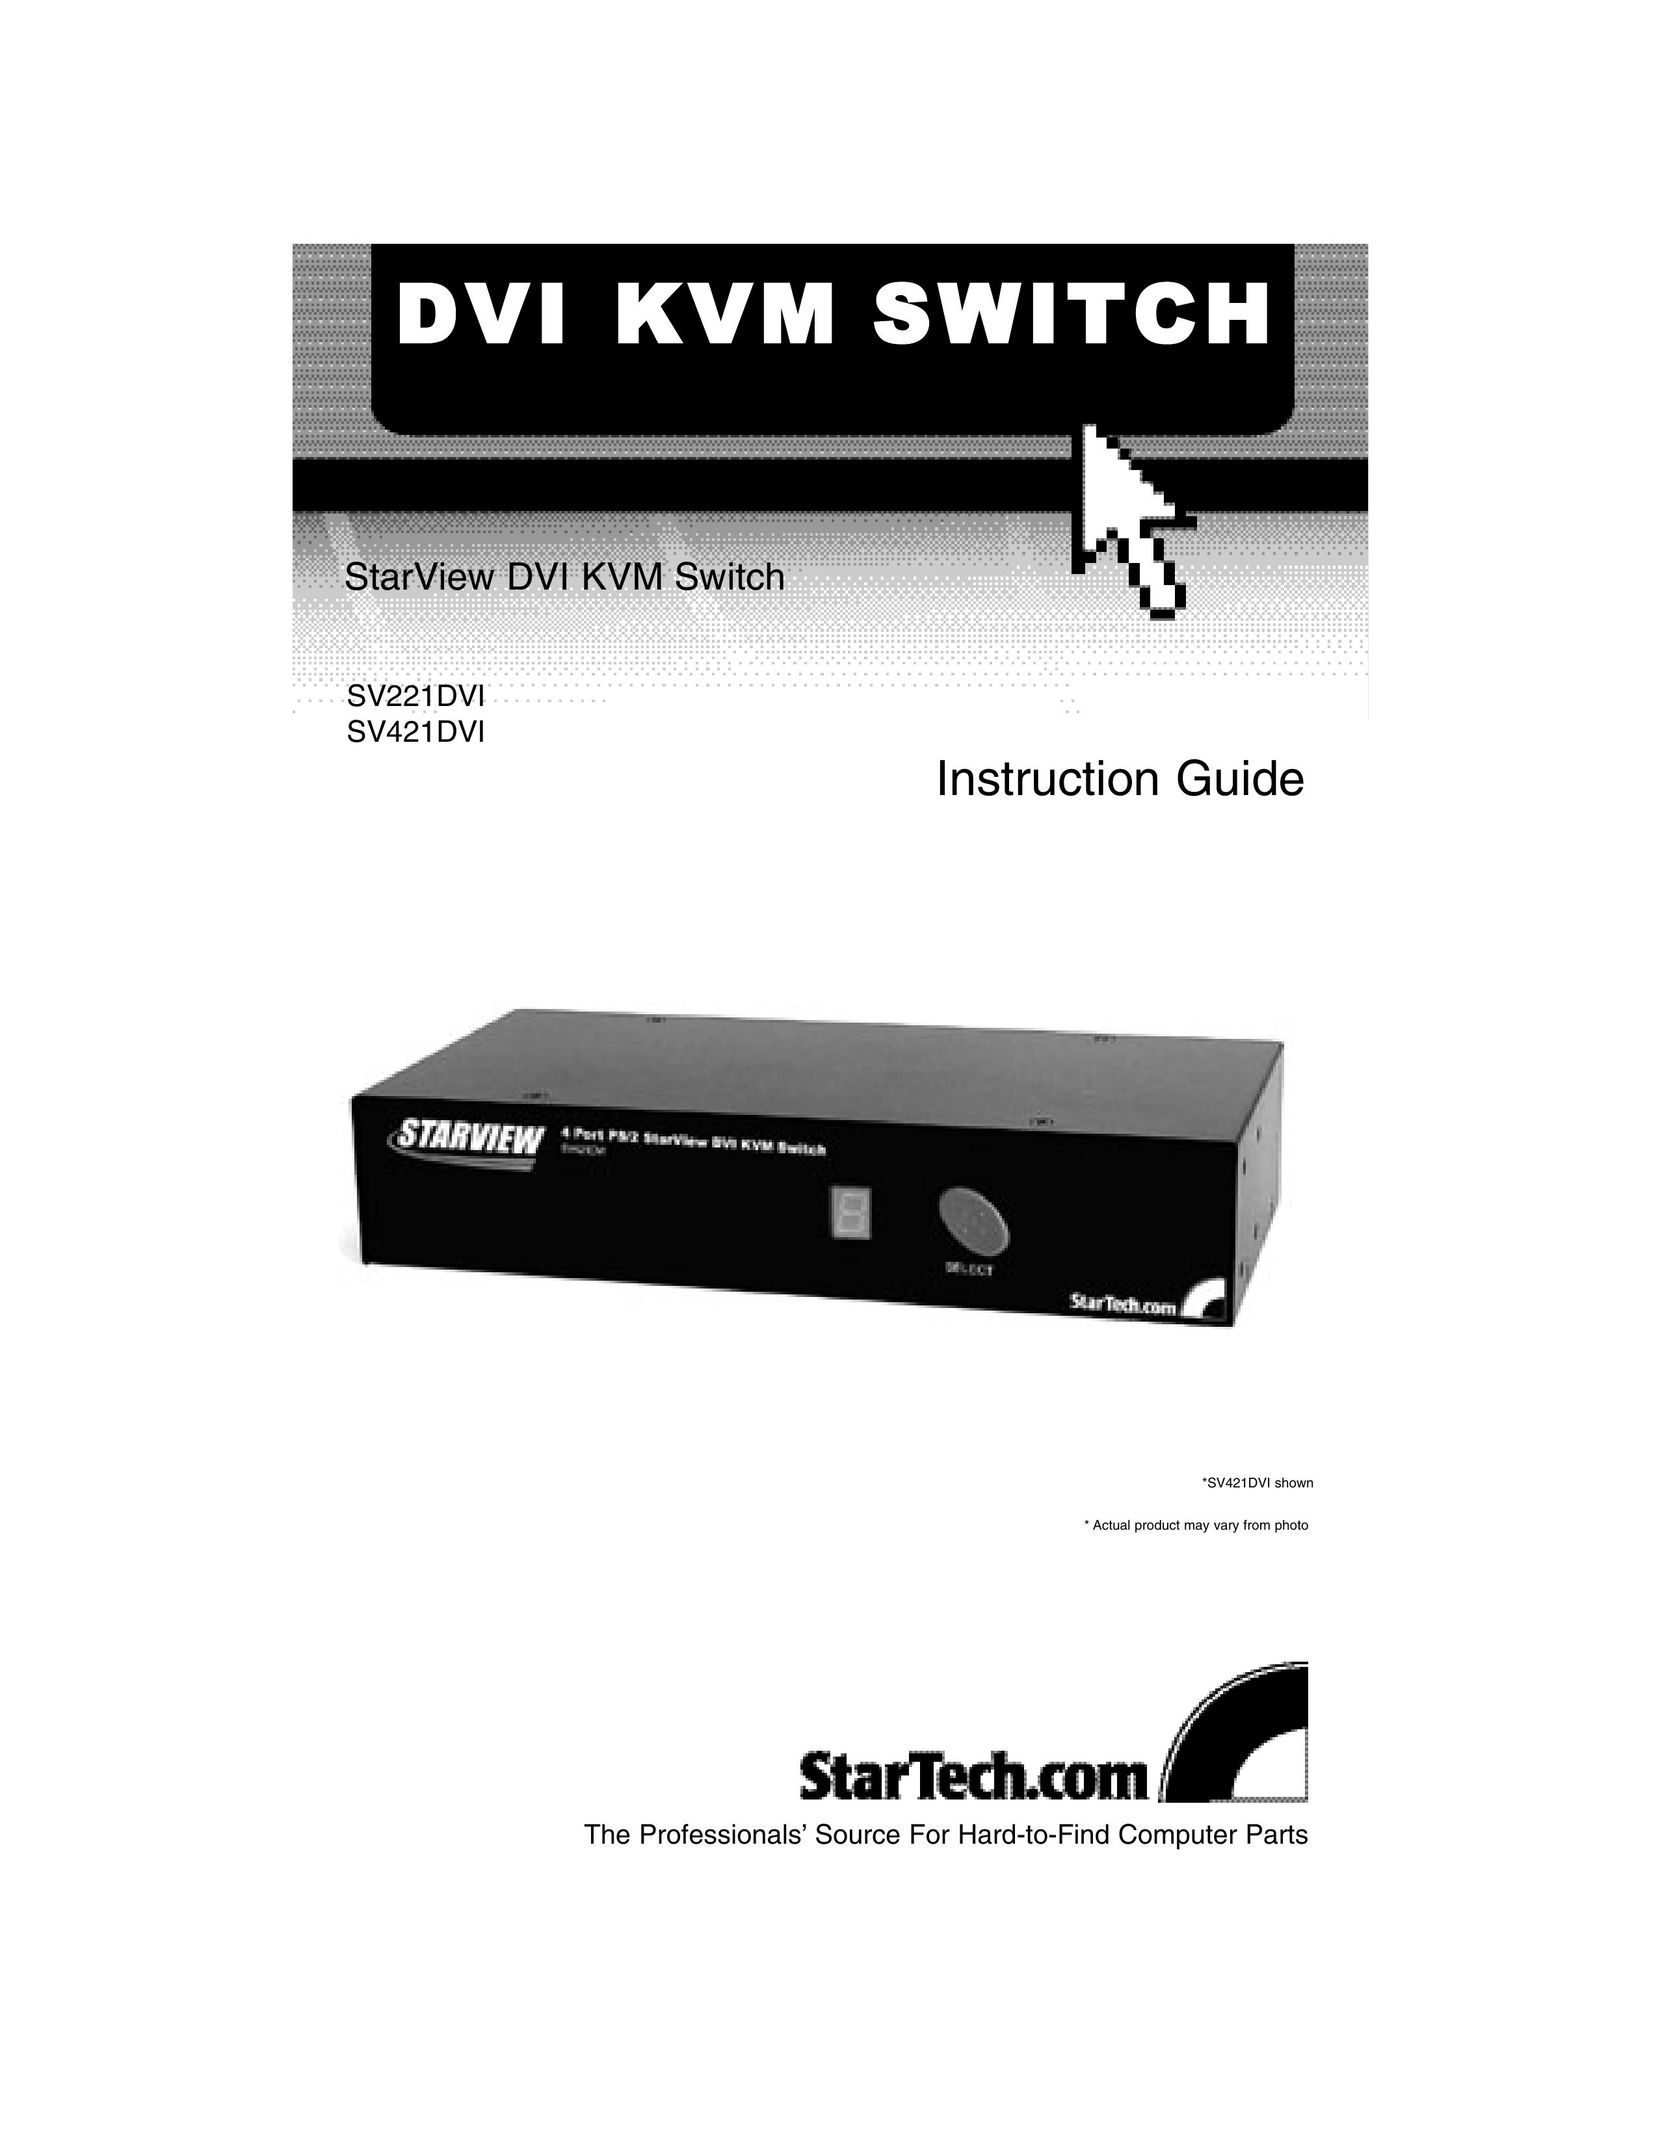 StarTech.com SV221DVI Switch User Manual